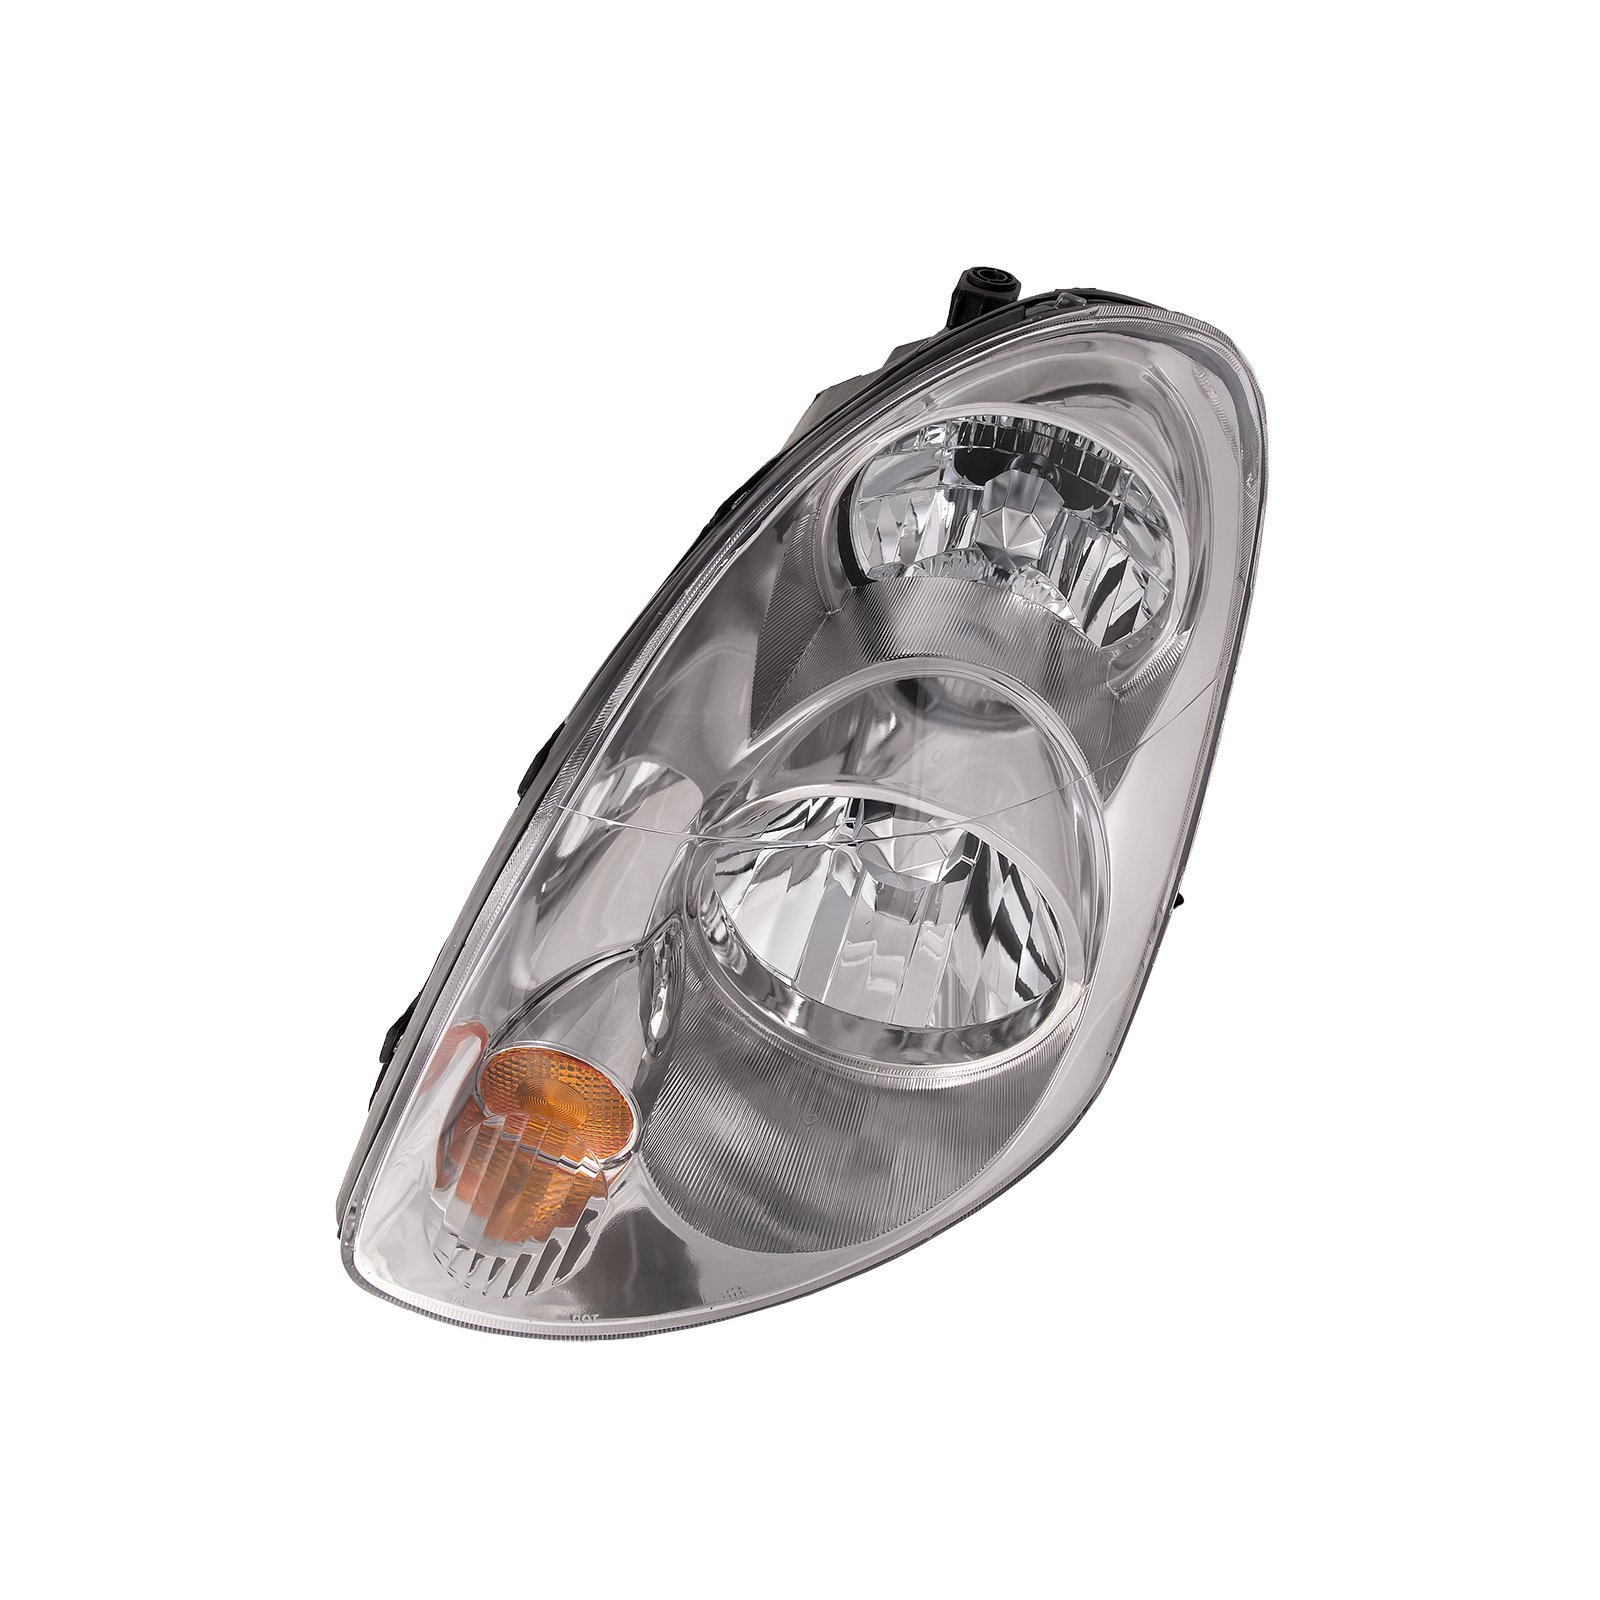 Drivers Halogen Headlight Headlamp Assembly for 03-04 Infiniti G35